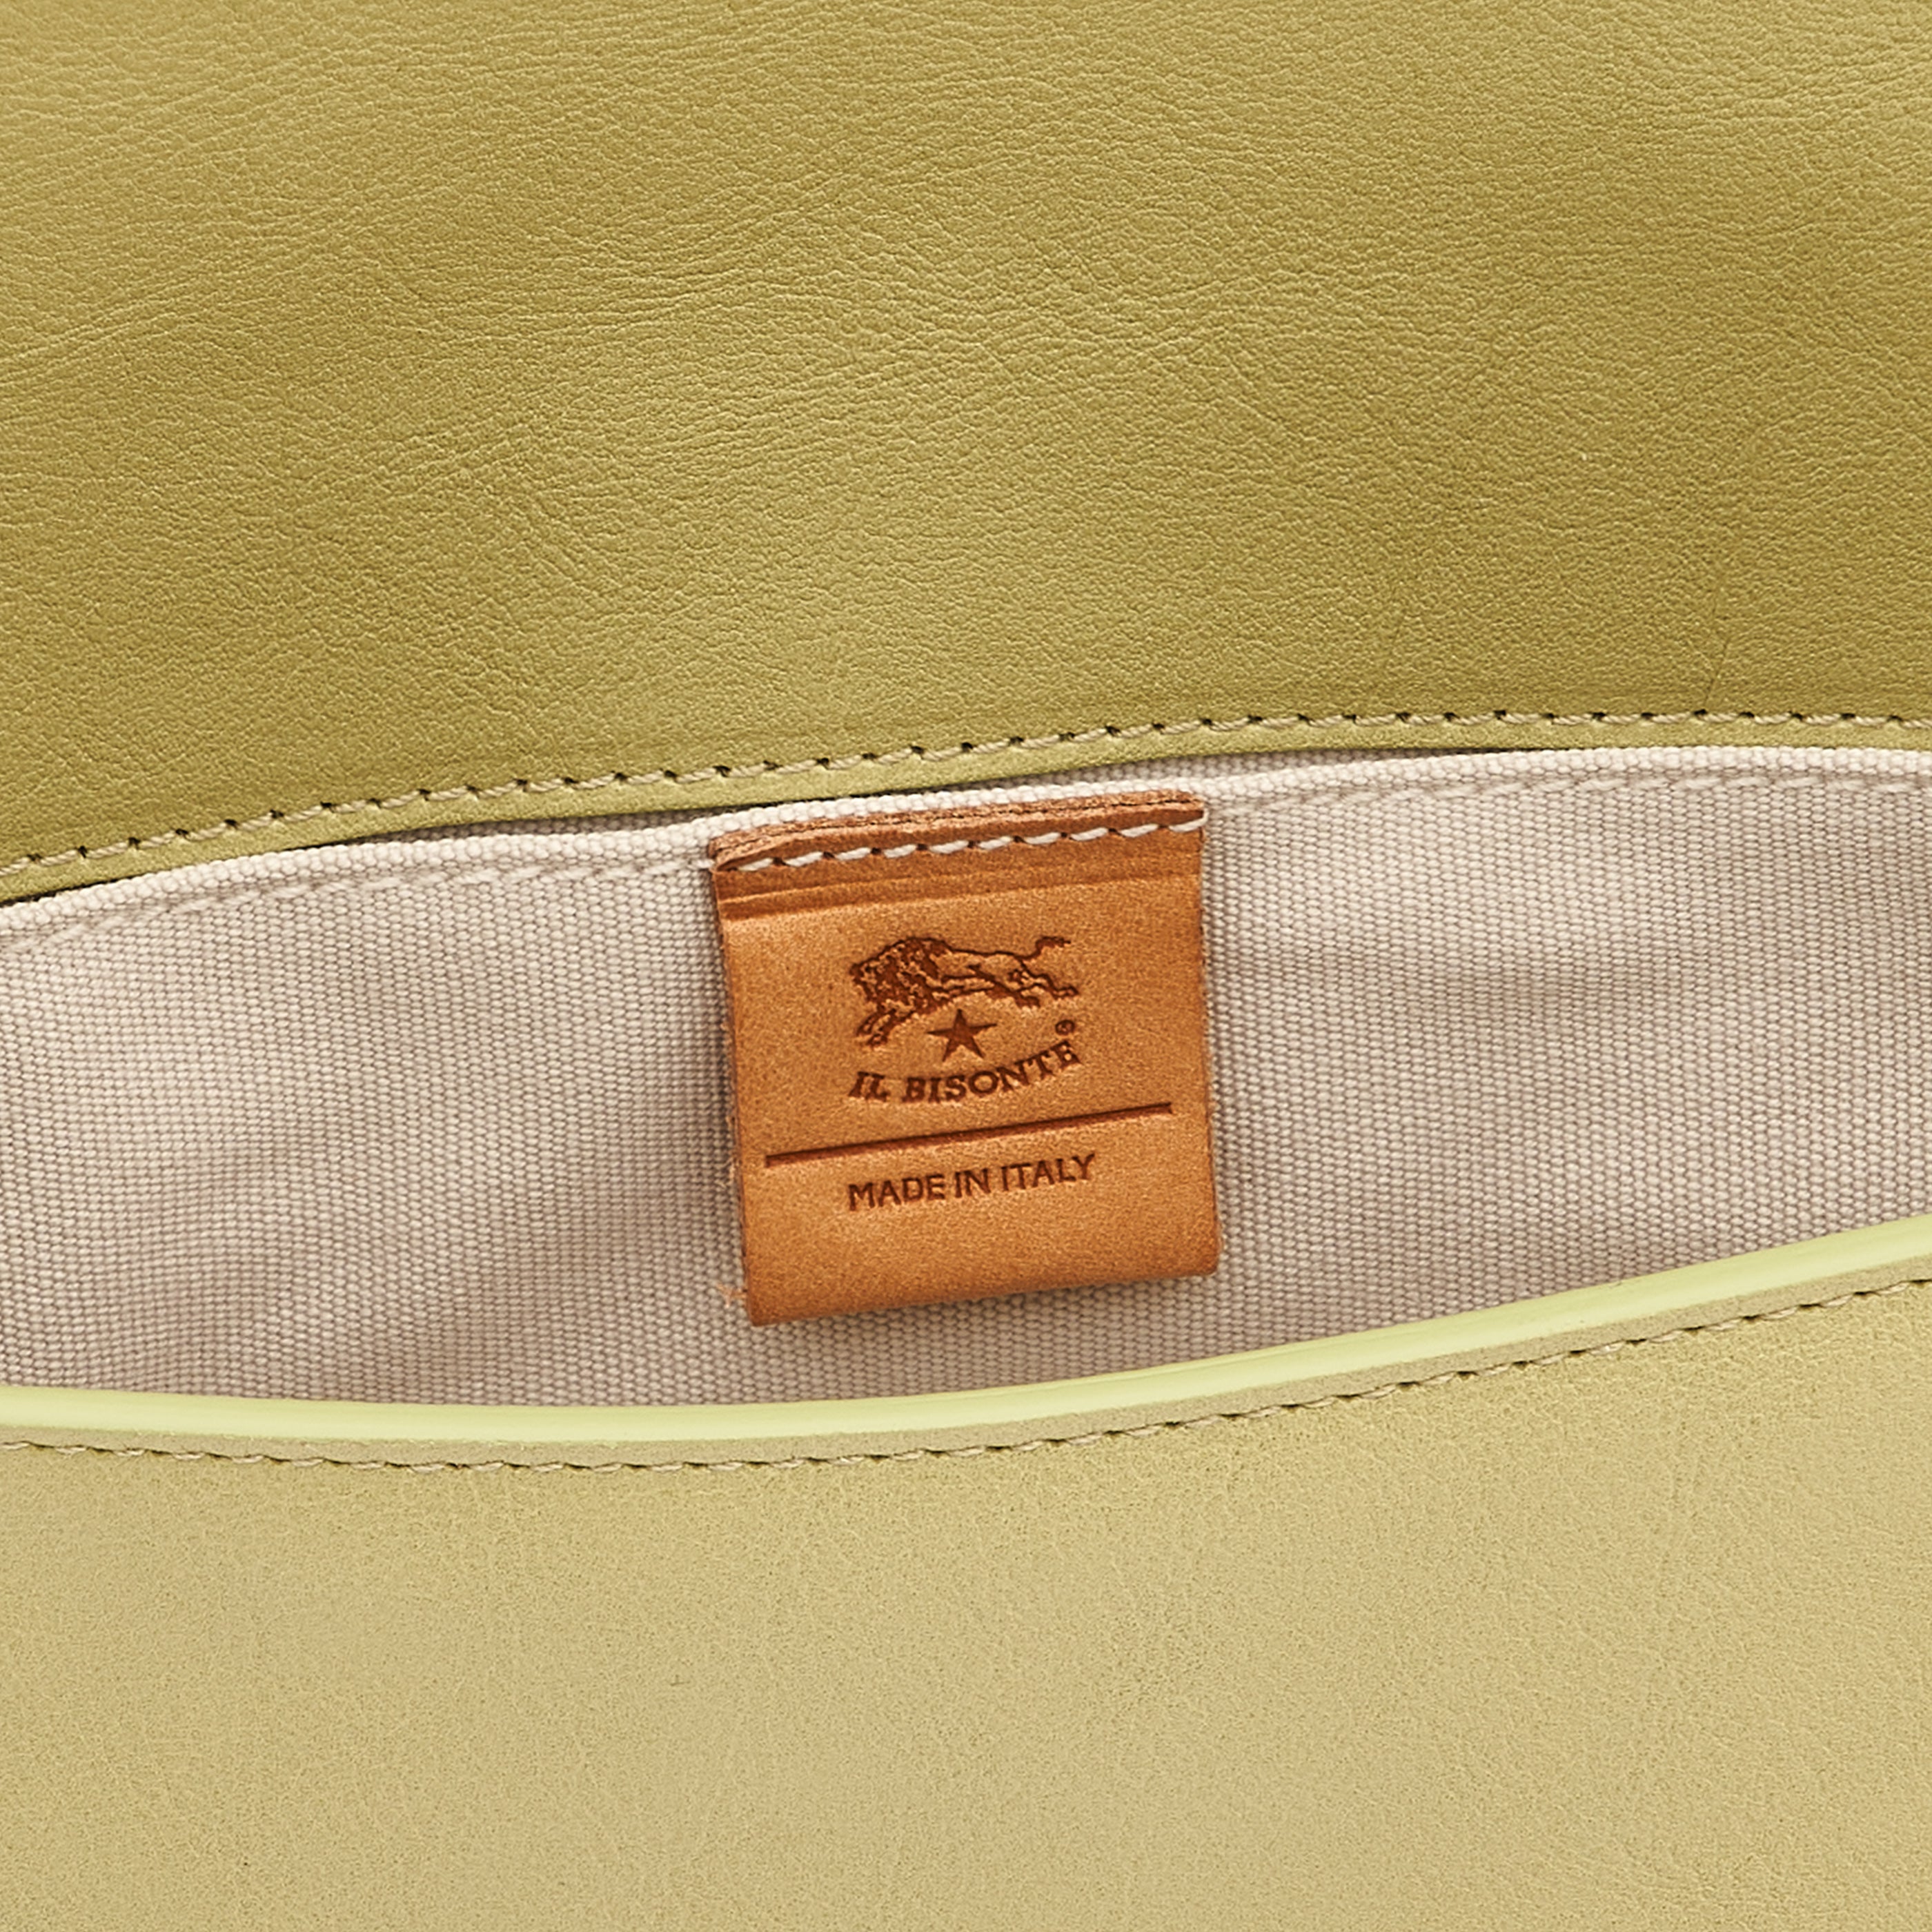 Studio | Women's crossbody bag in leather color pistachio